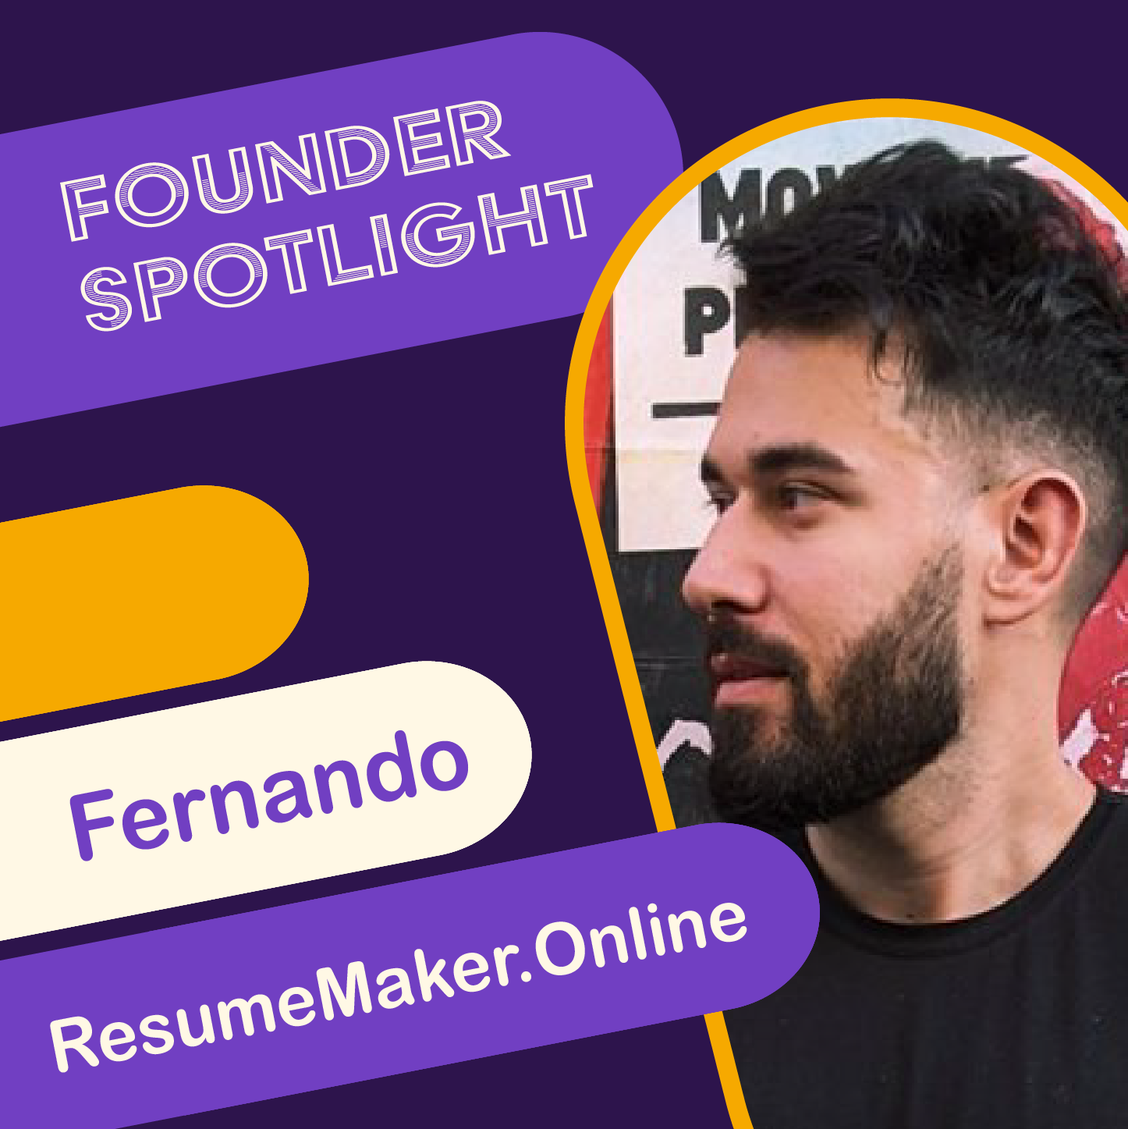 Founder Spotlight #5 - Fernando Pessagno